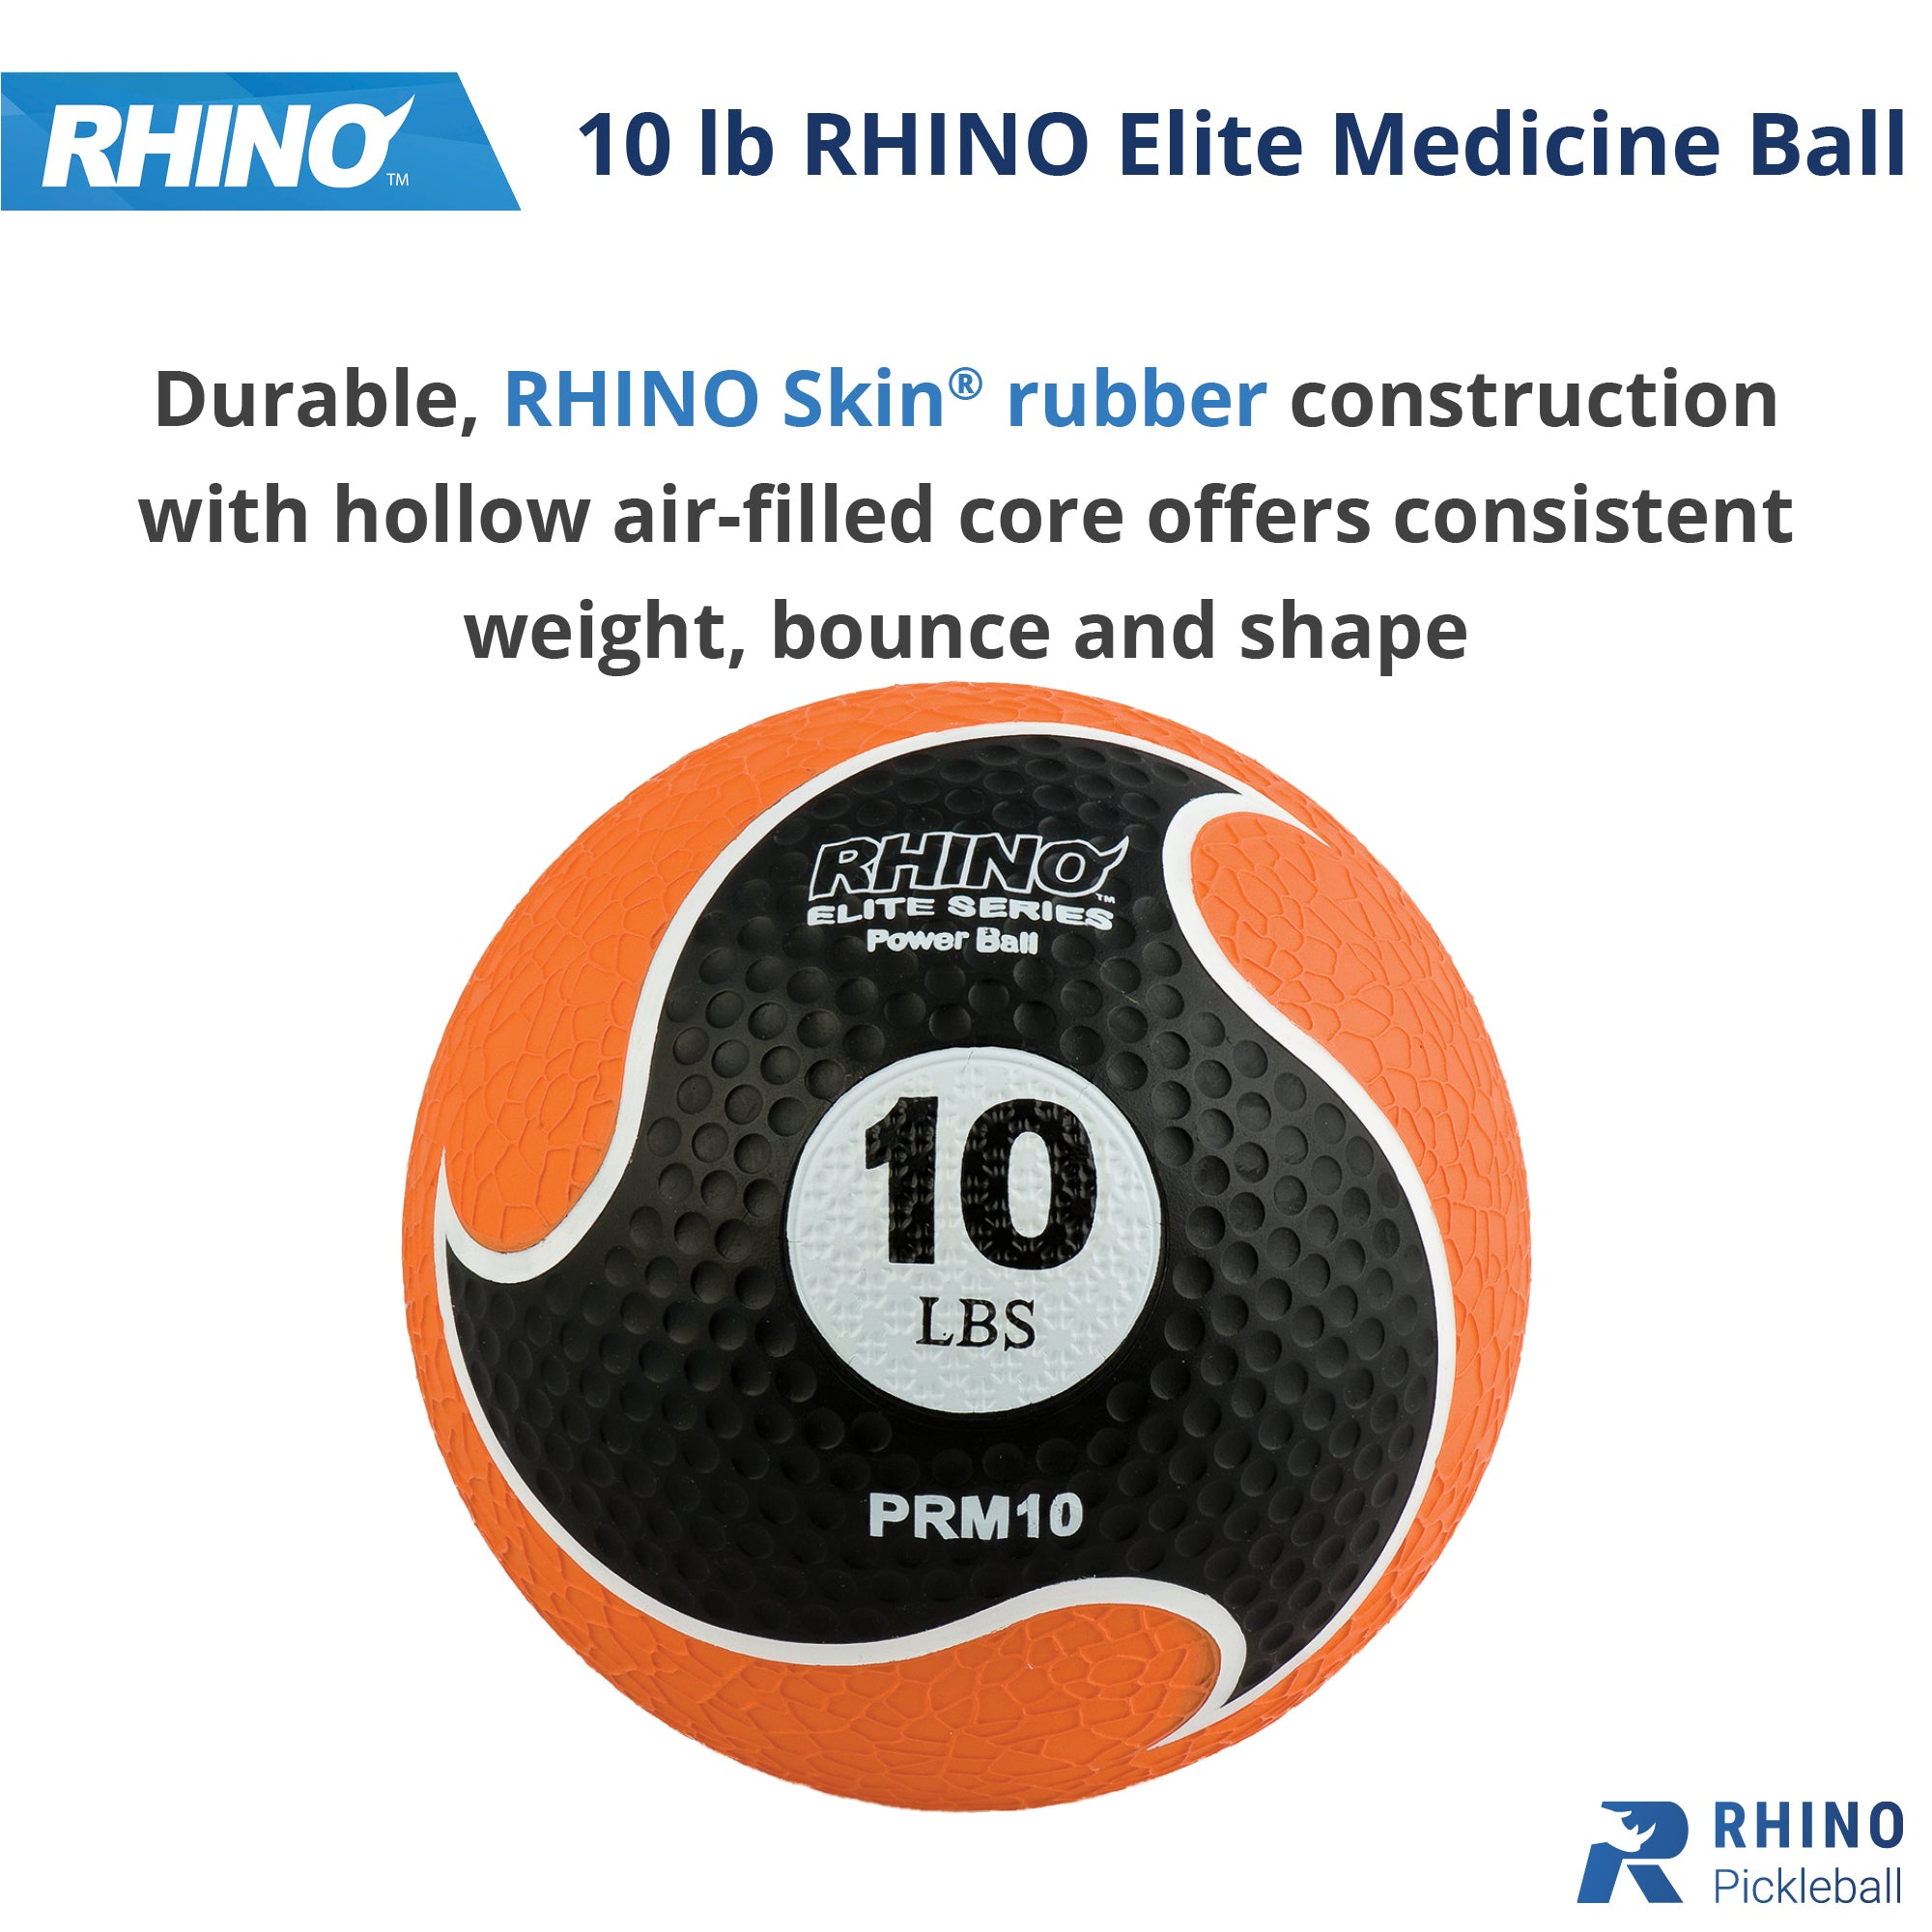 Rhino Elite Medicine Ball Series 10 lb RHINO __label:NEW! Agility fitness medicine ball physical therapy resistance Training